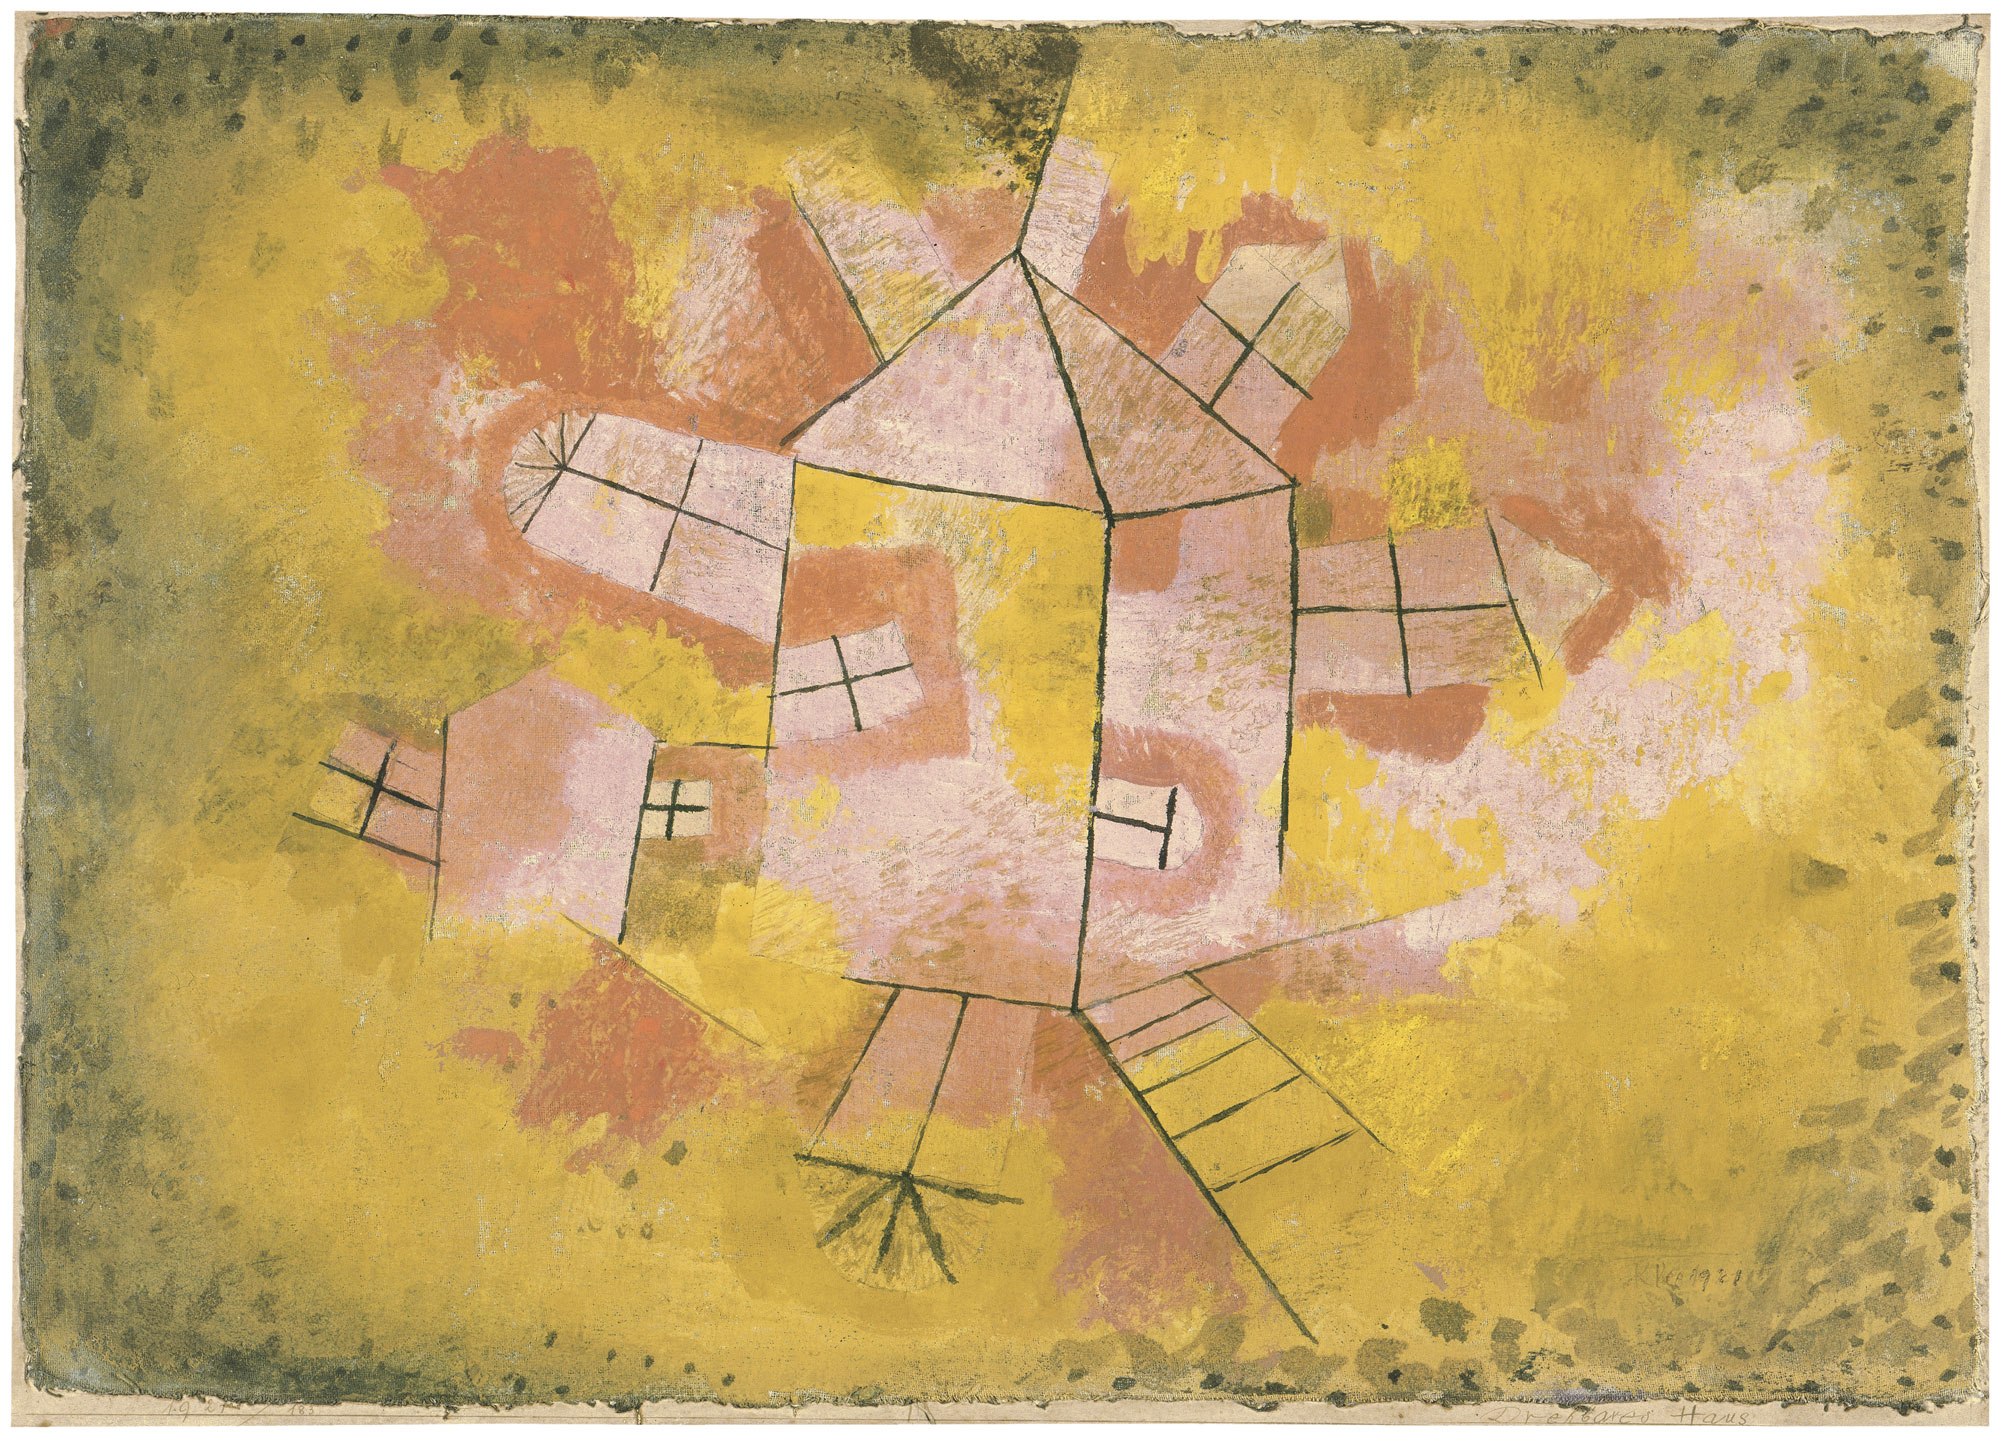 CASA GIRATORIA - Paul Klee